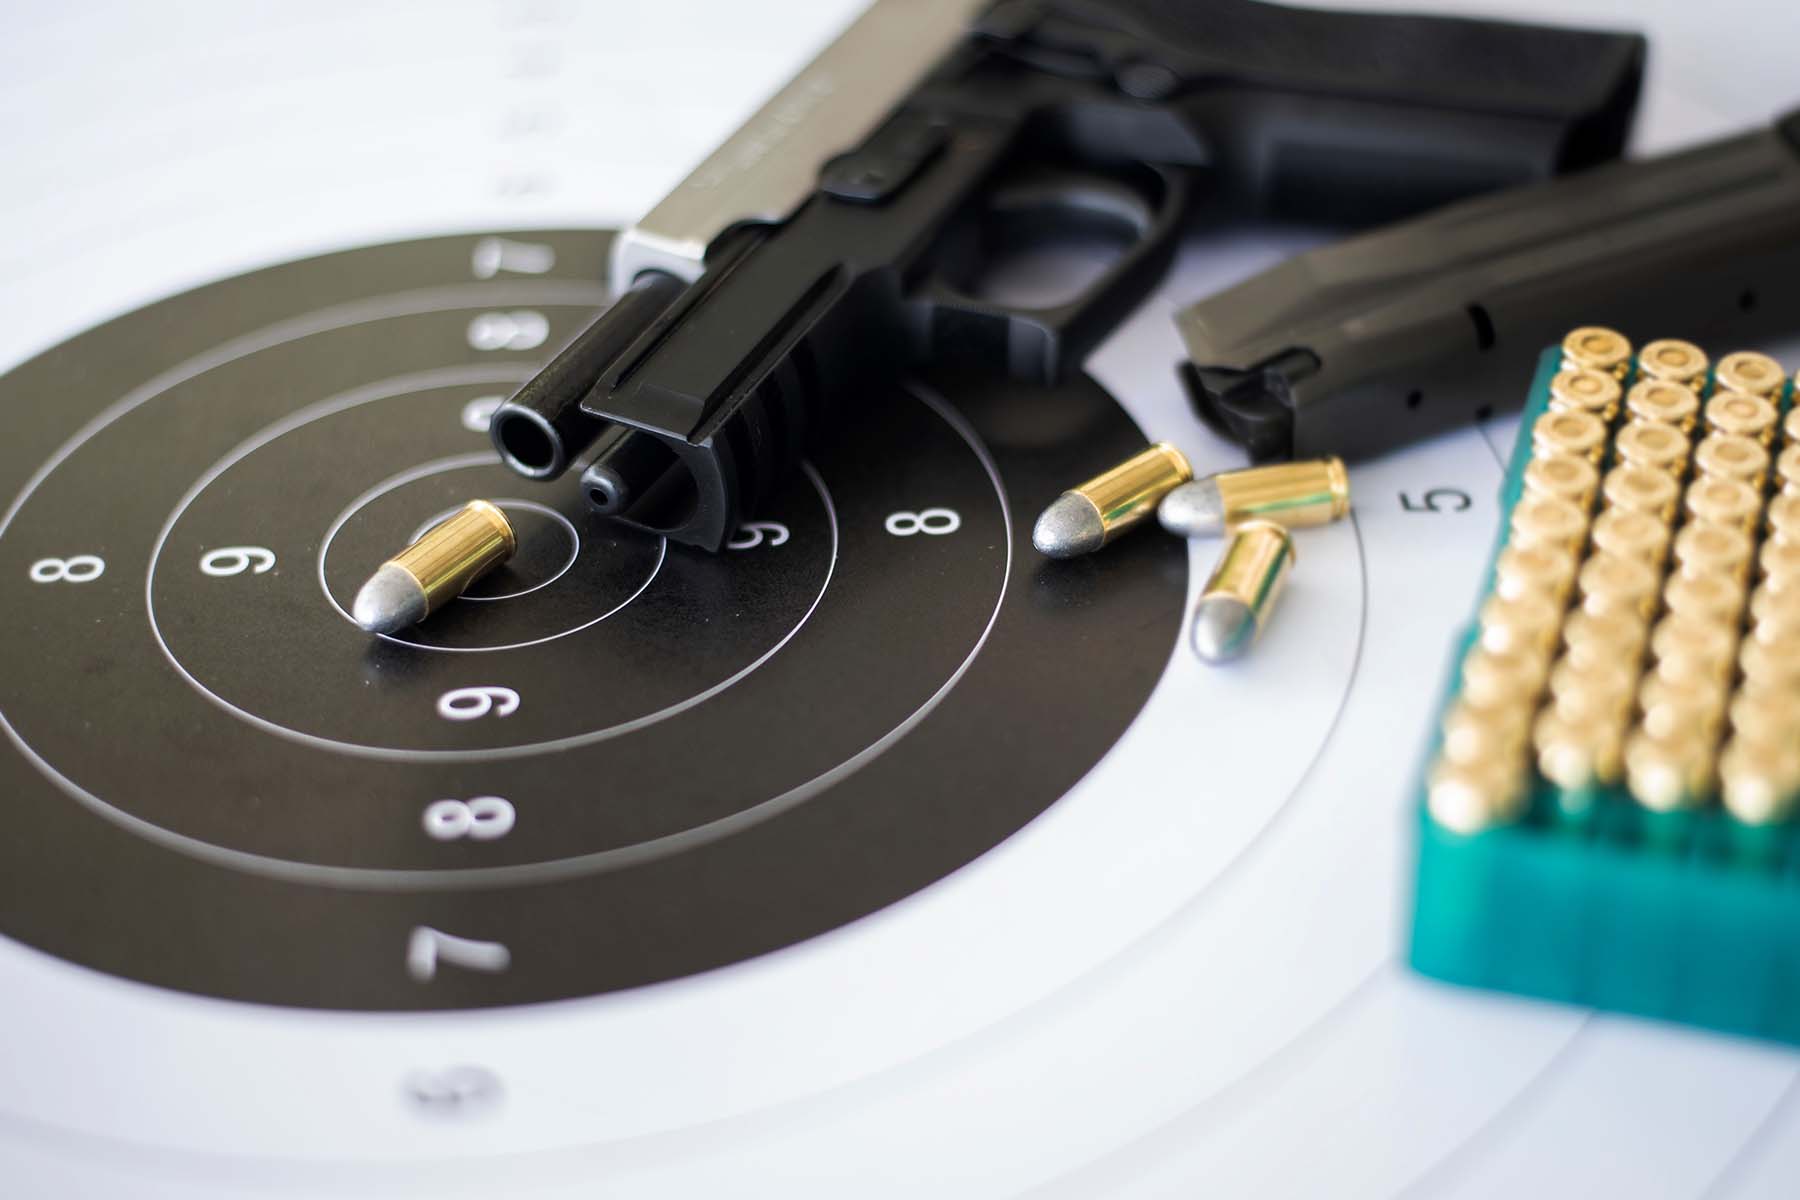 A handgun lying on a target with ammo near it.